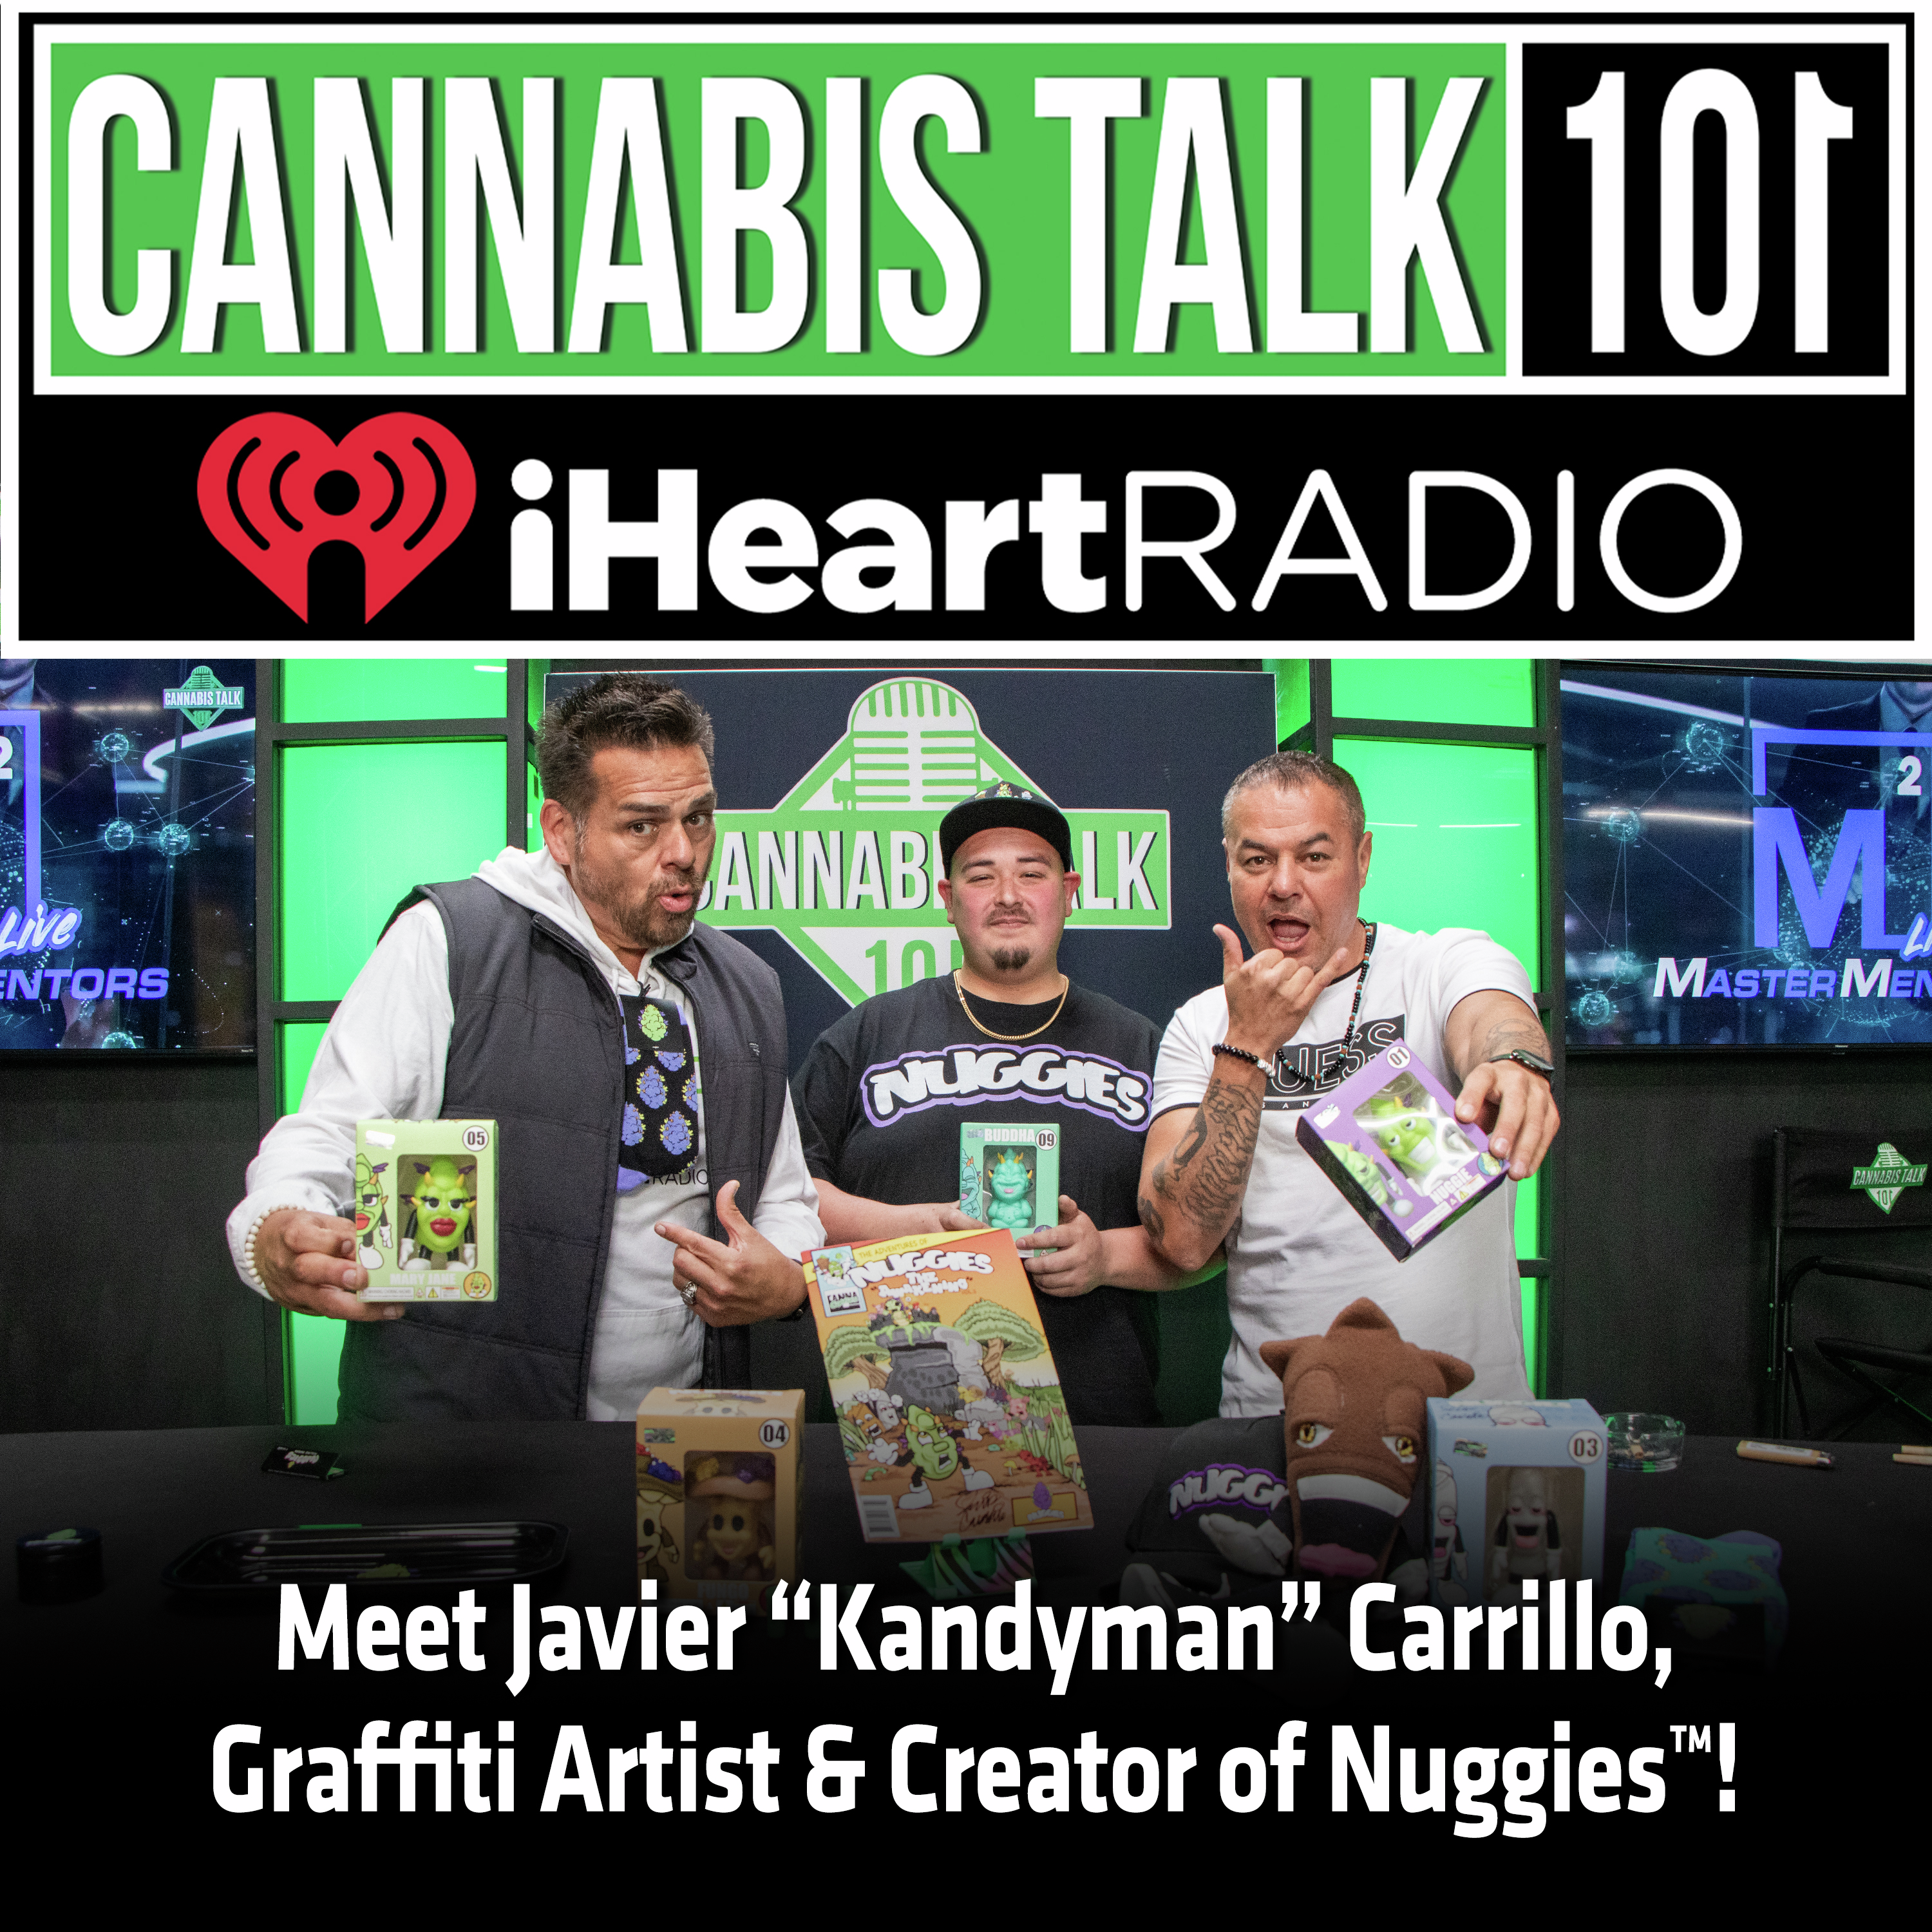 Meet Javier “Kandyman” Carrillo, Graffiti Artist & Creator of Nuggies™!